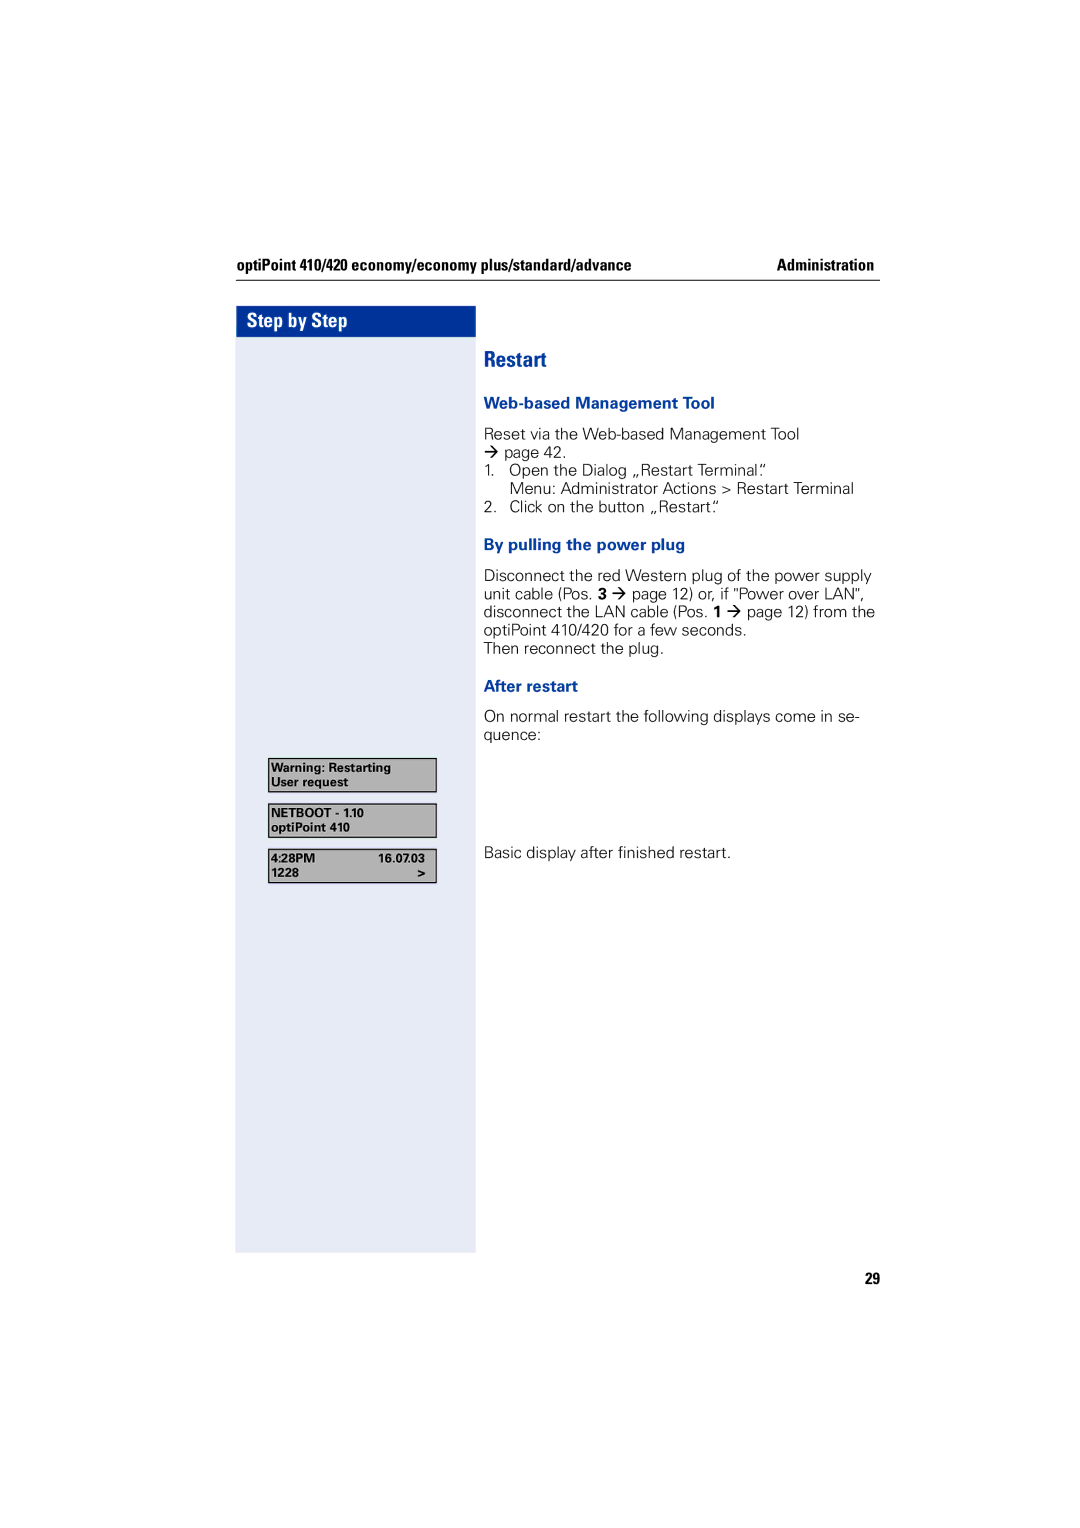 Siemens 2000 manual Restart, Web-based Management Tool, By pulling the power plug, After restart 